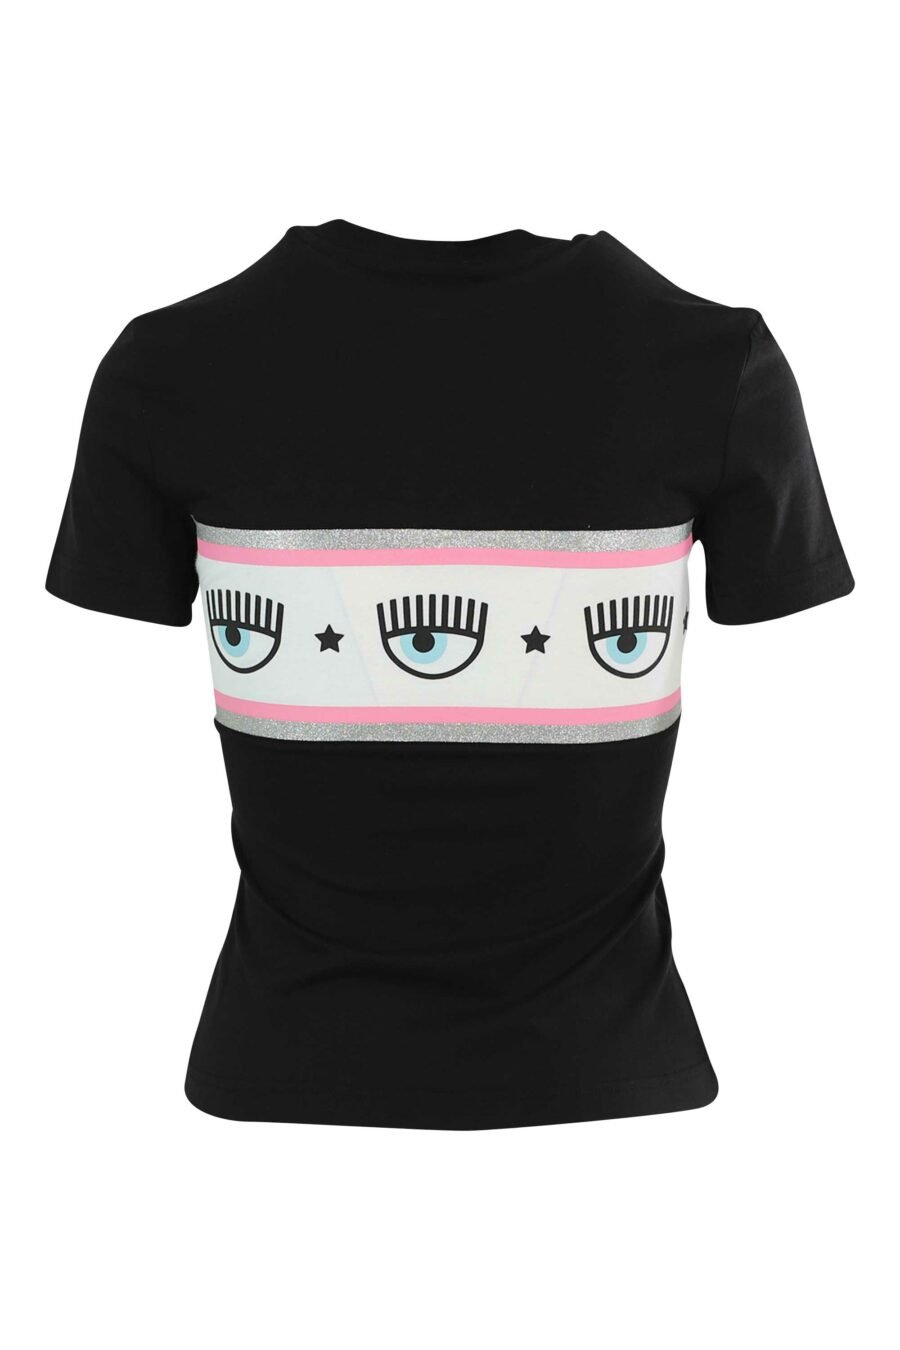 Black T-shirt with eye logo on ribbon - 8052672420053 2